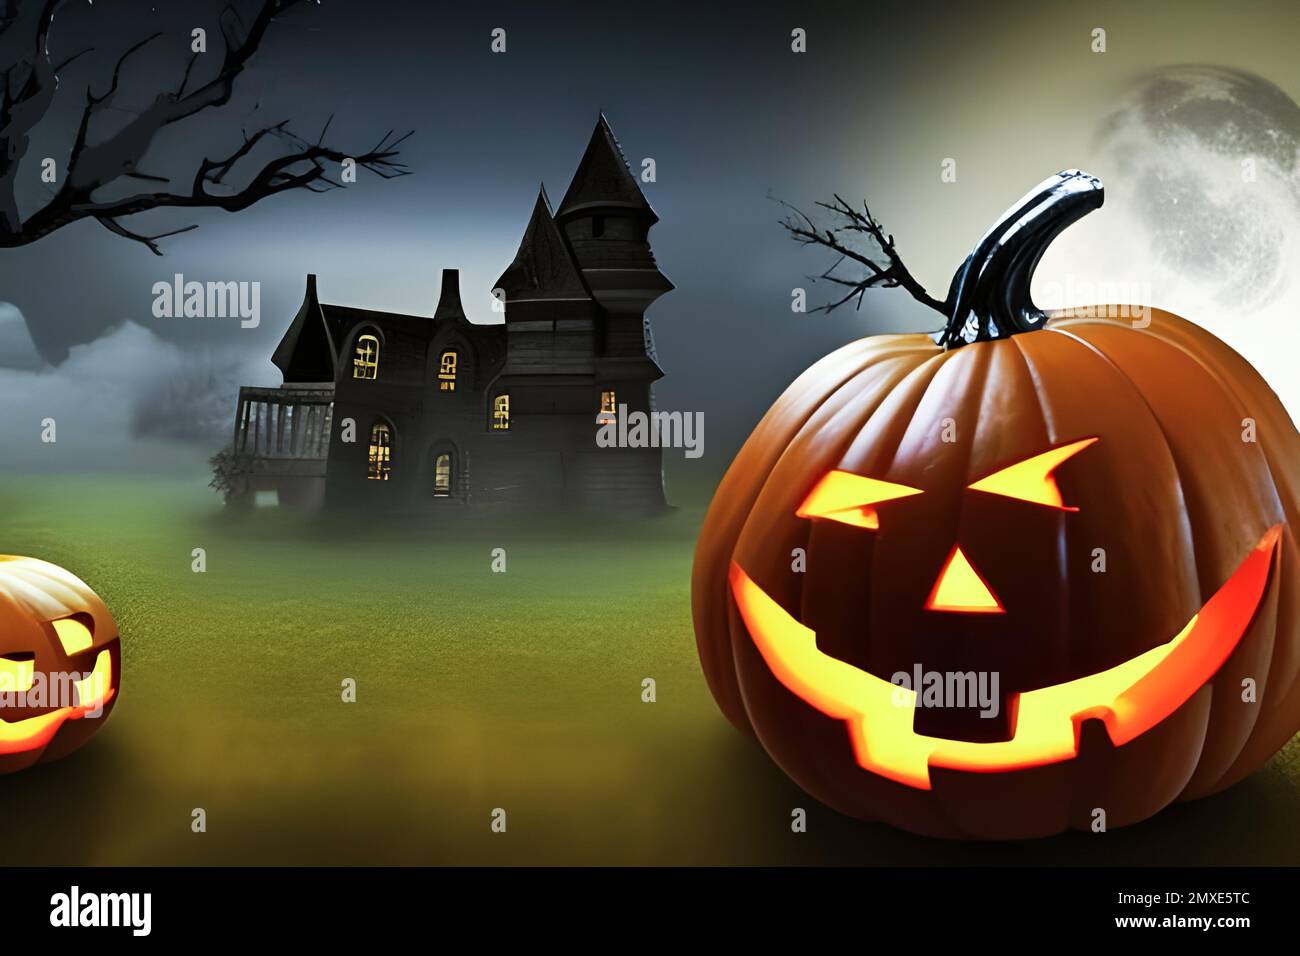 Halloween scene with haunted house and jack o lanterns. Stock Photo